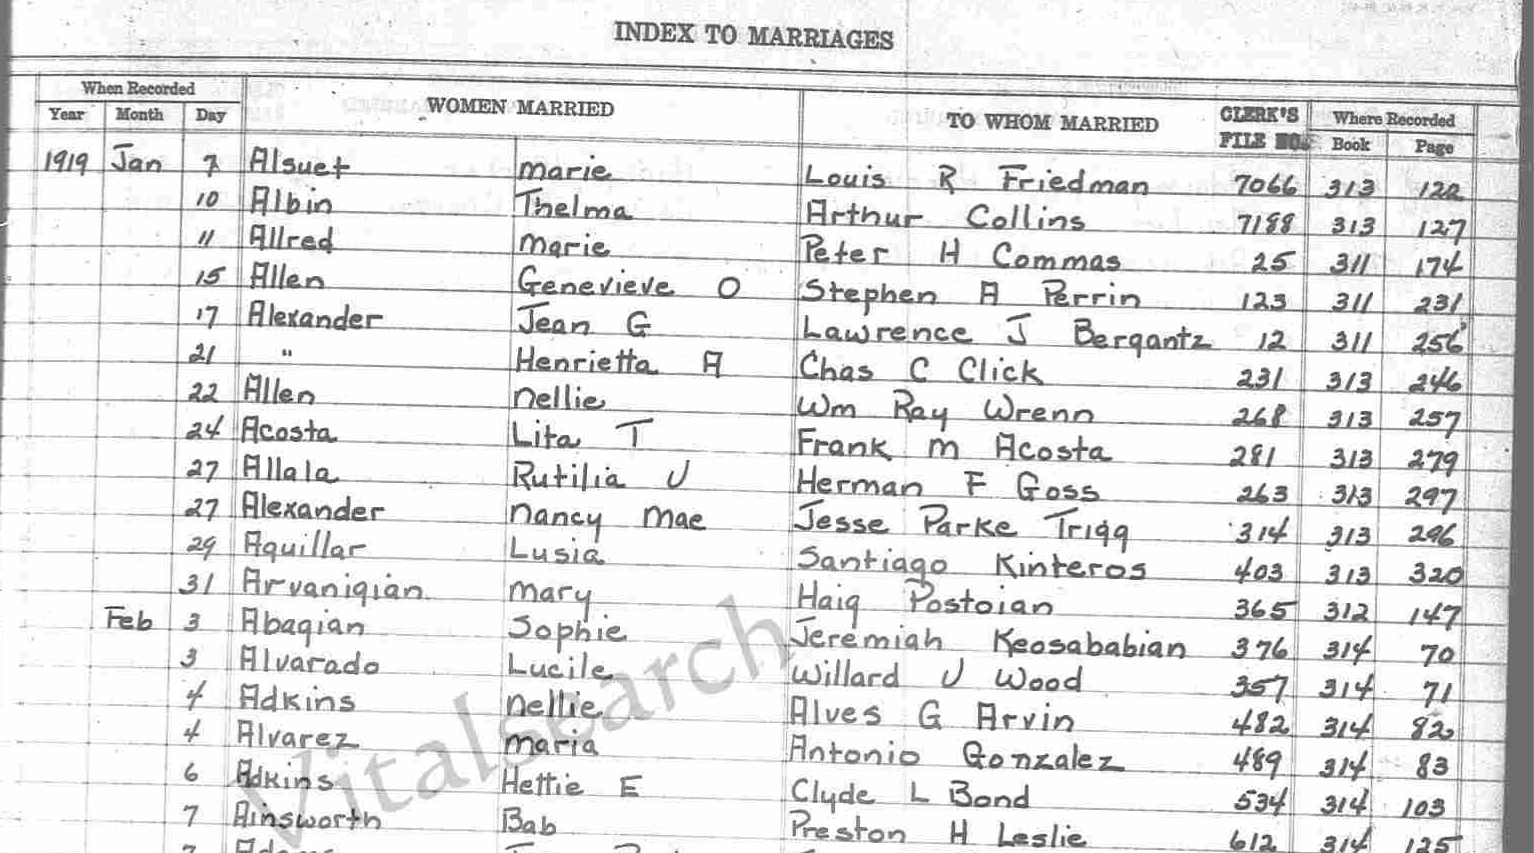 Marriage Register, Lucile Alvarado and Willard Wood, 1919